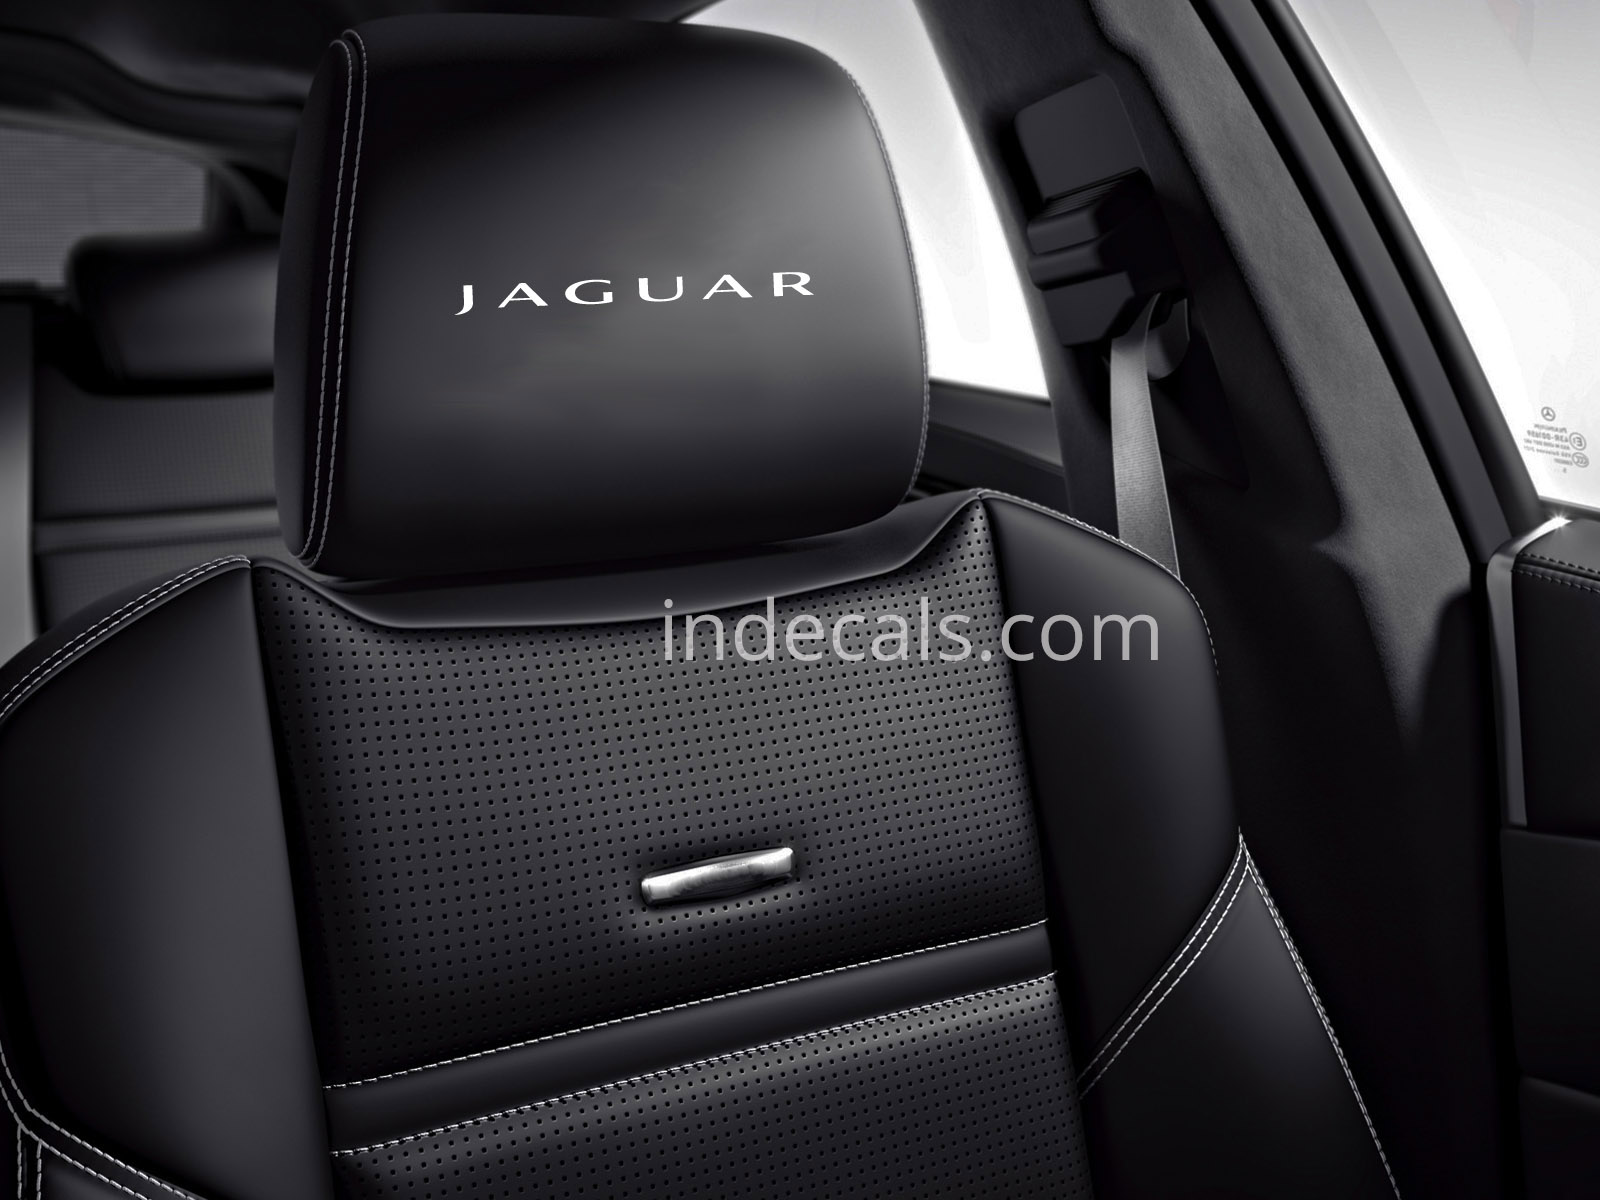 6 x Jaguar Stickers for Headrests - White